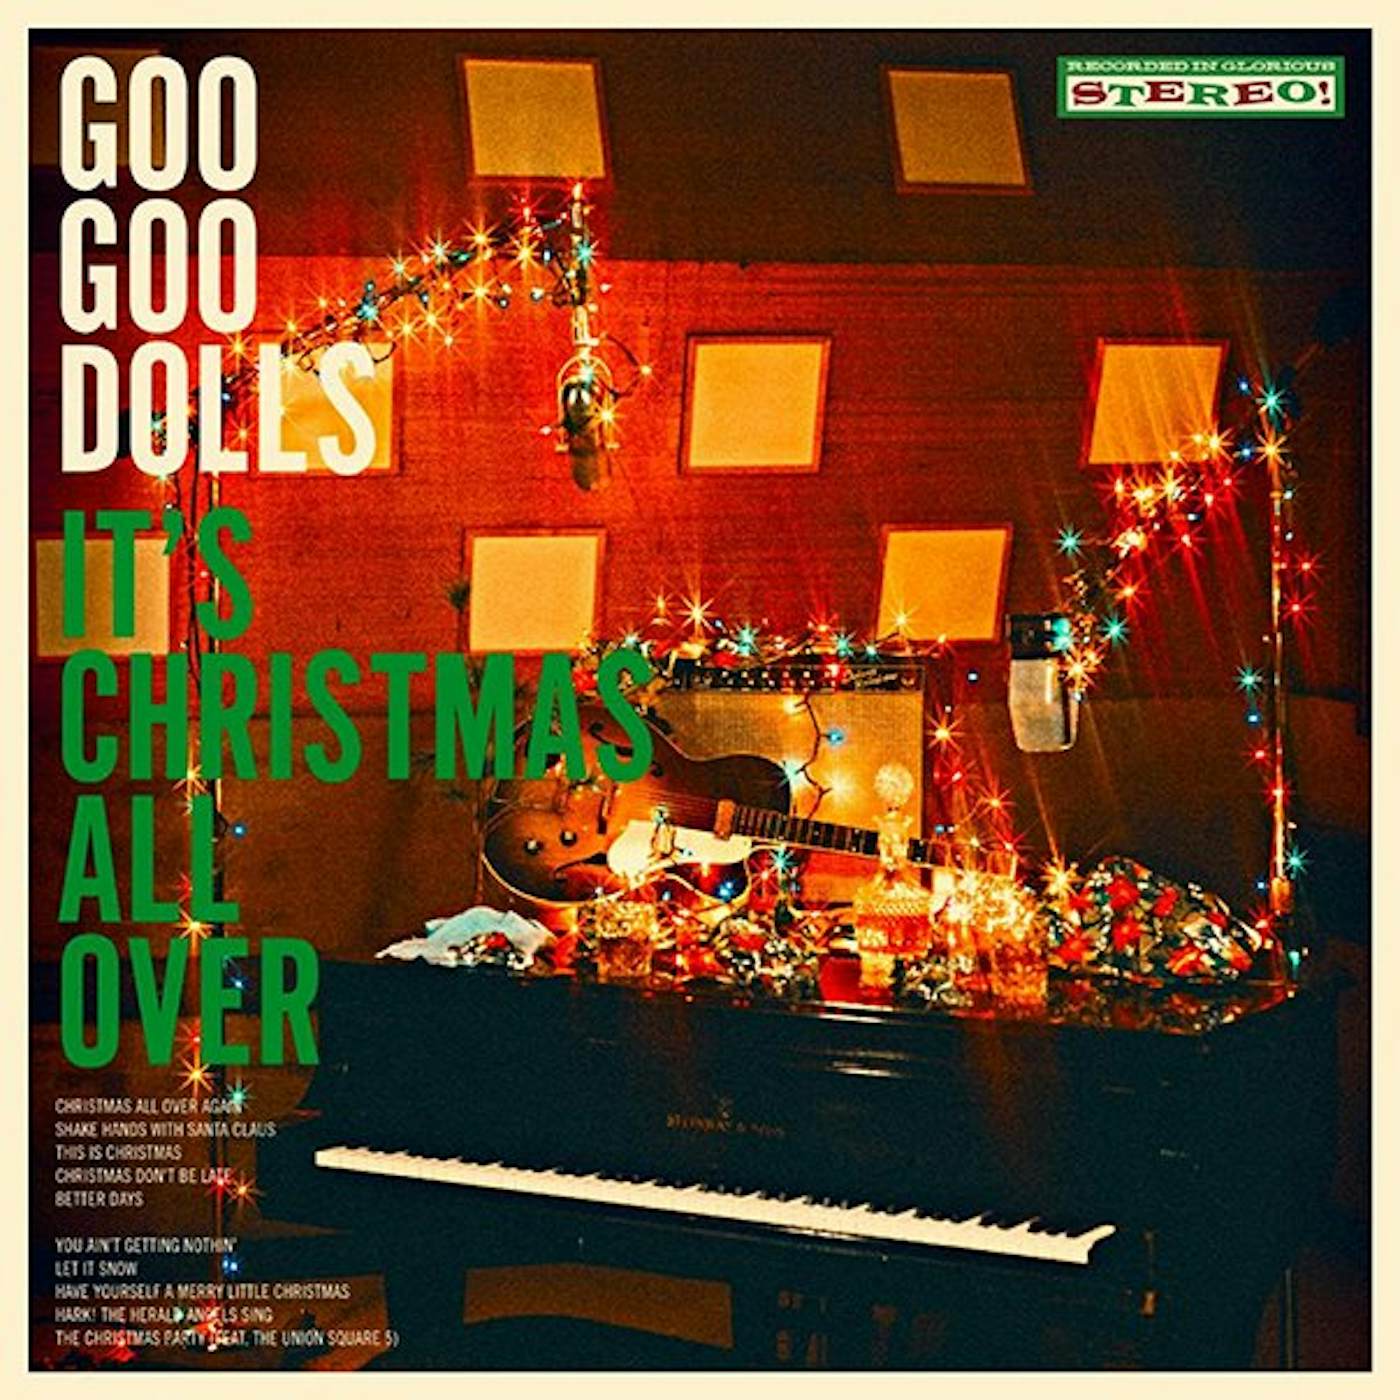 The Goo Goo Dolls It's Christmas All Over Vinyl Record